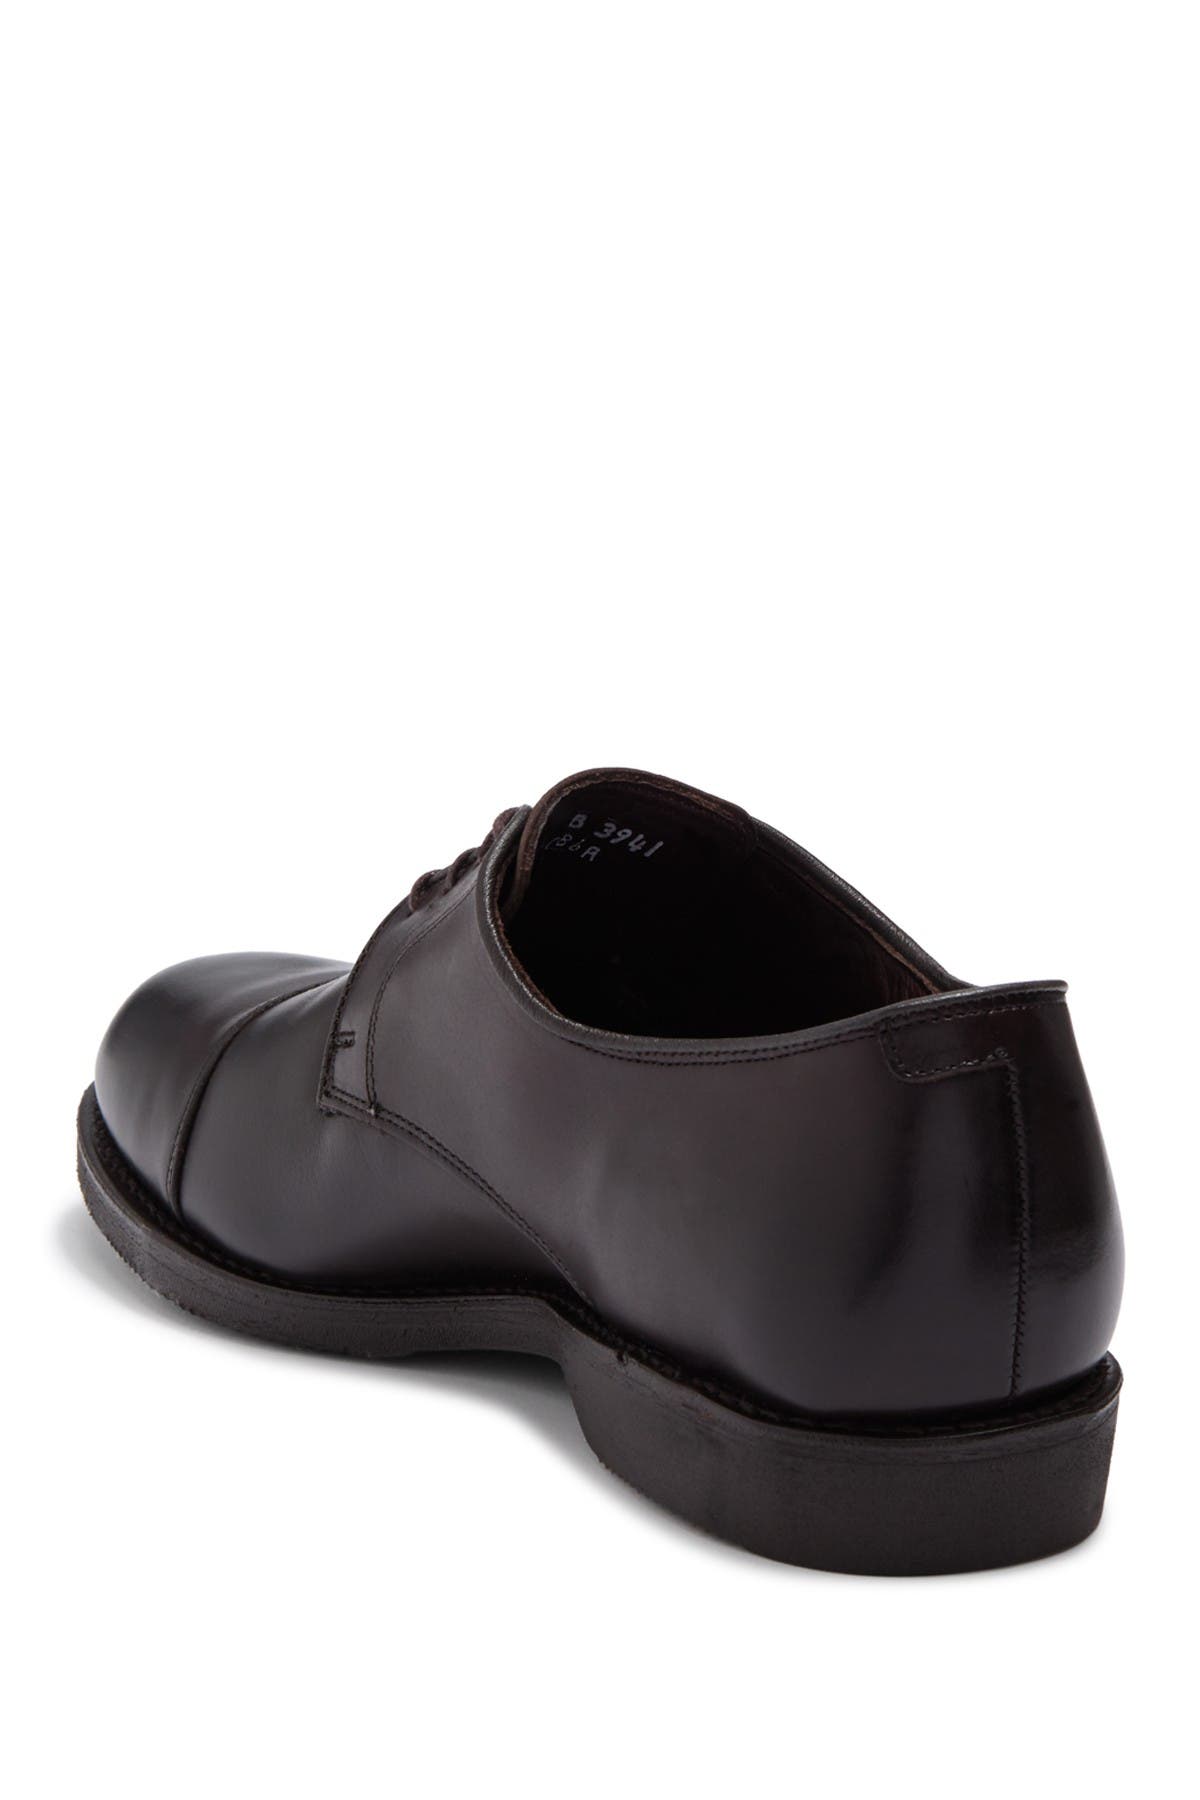 Allen Edmonds Shoes for Men | Nordstrom 